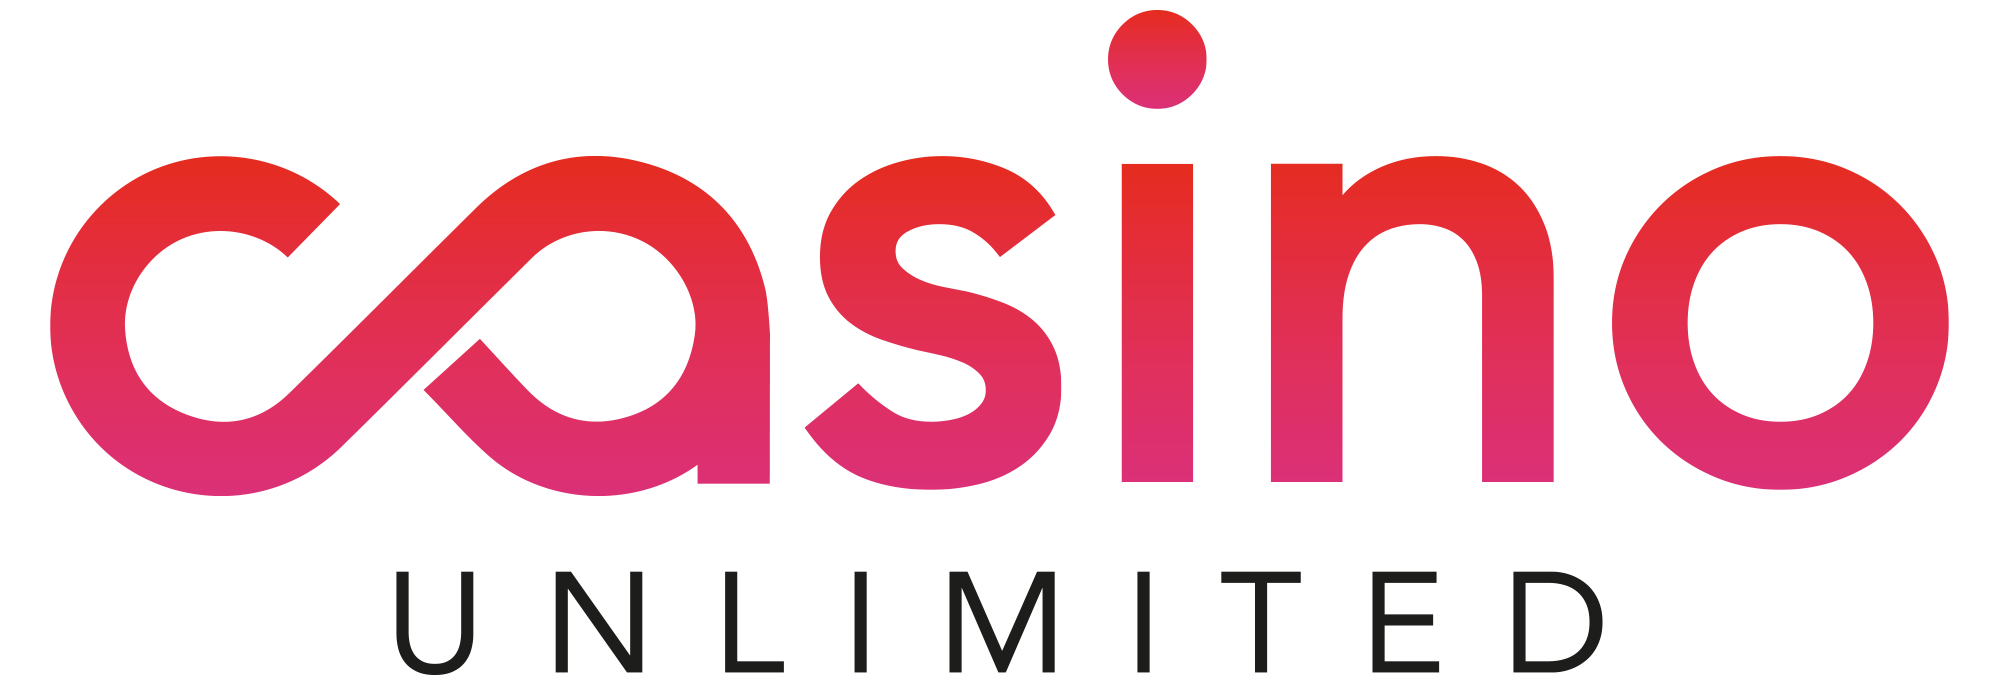 Casino UNLIMITED logotype